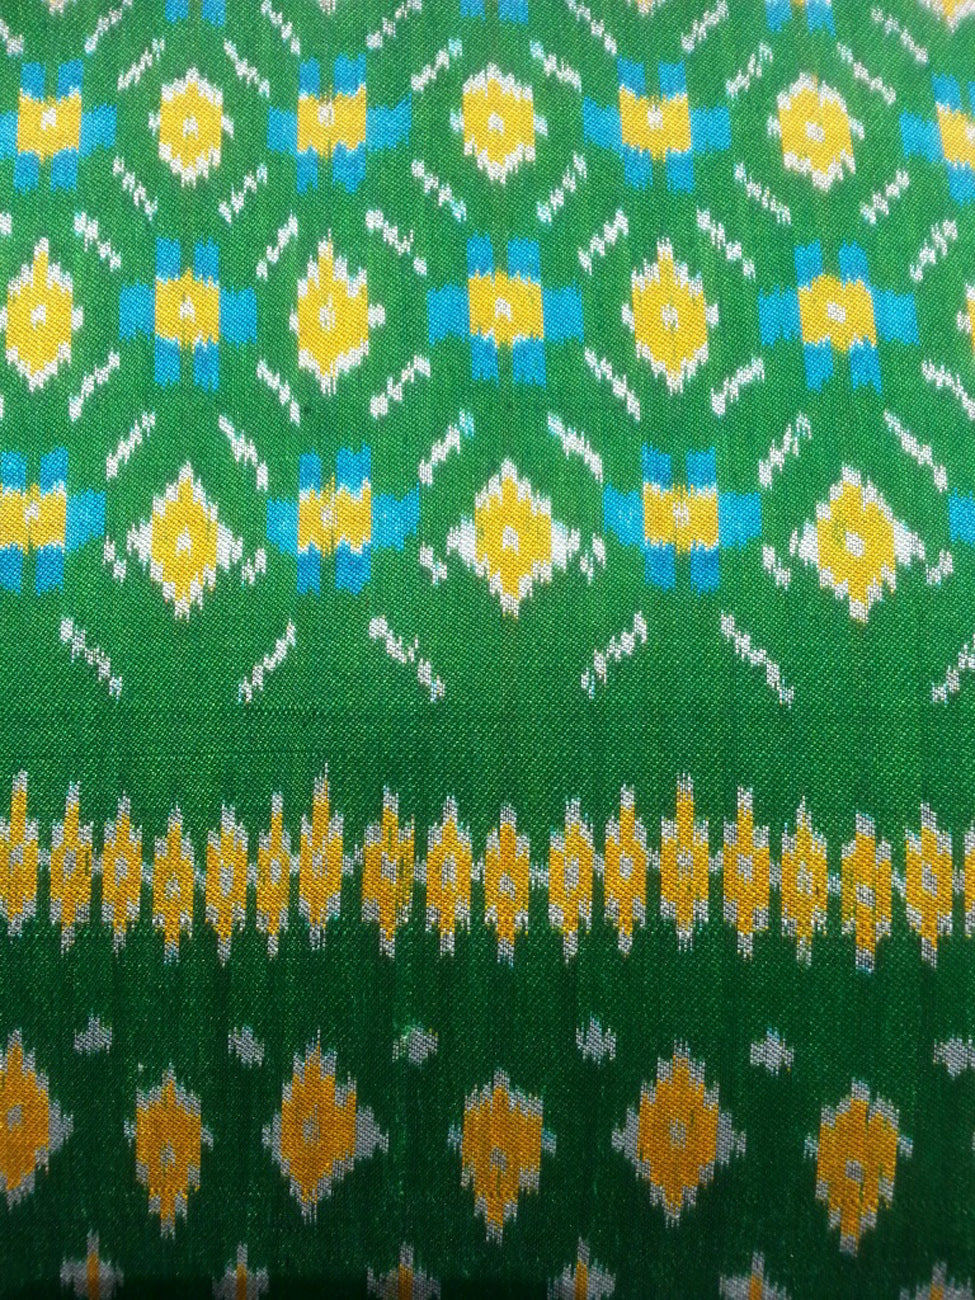 Cambodian Silk Ikat Pillow Green